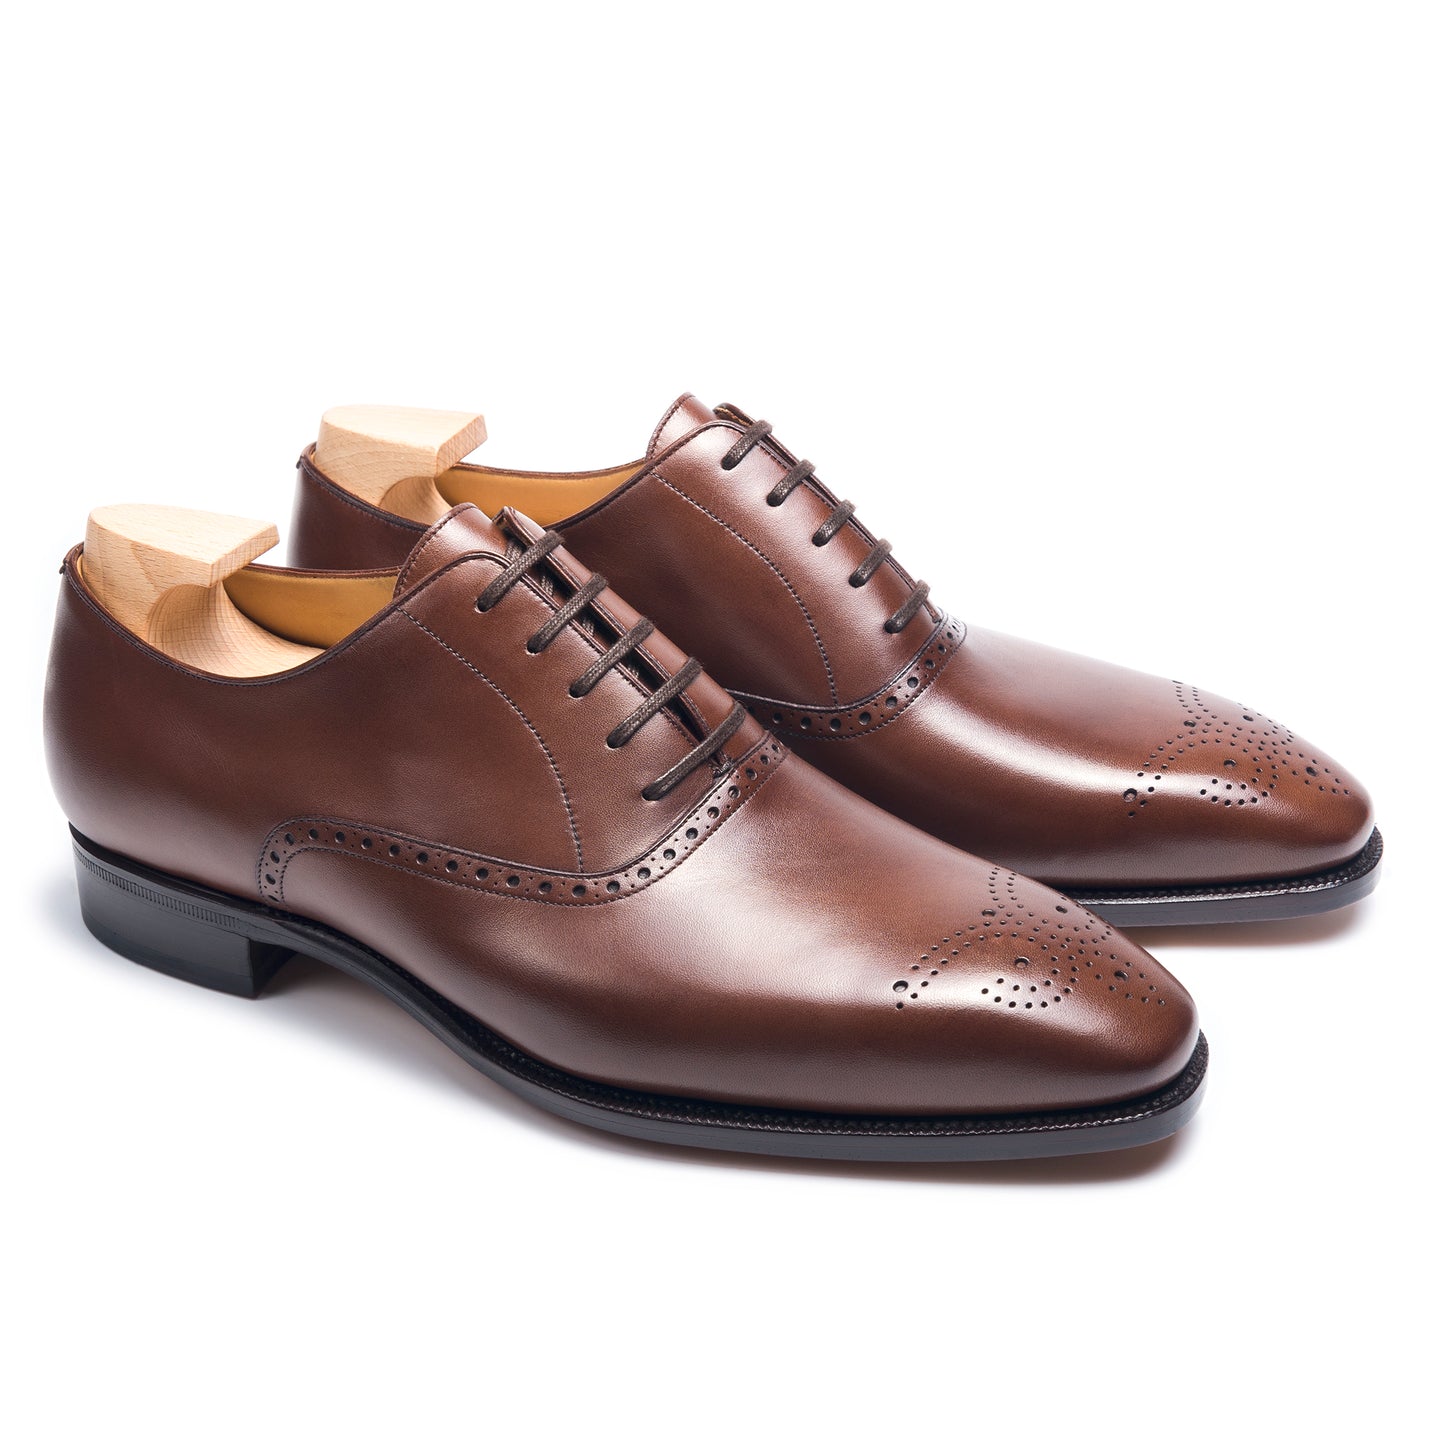 TLB Mallorca leather shoes 195 / VAN GOGH / VEGANO BROWN